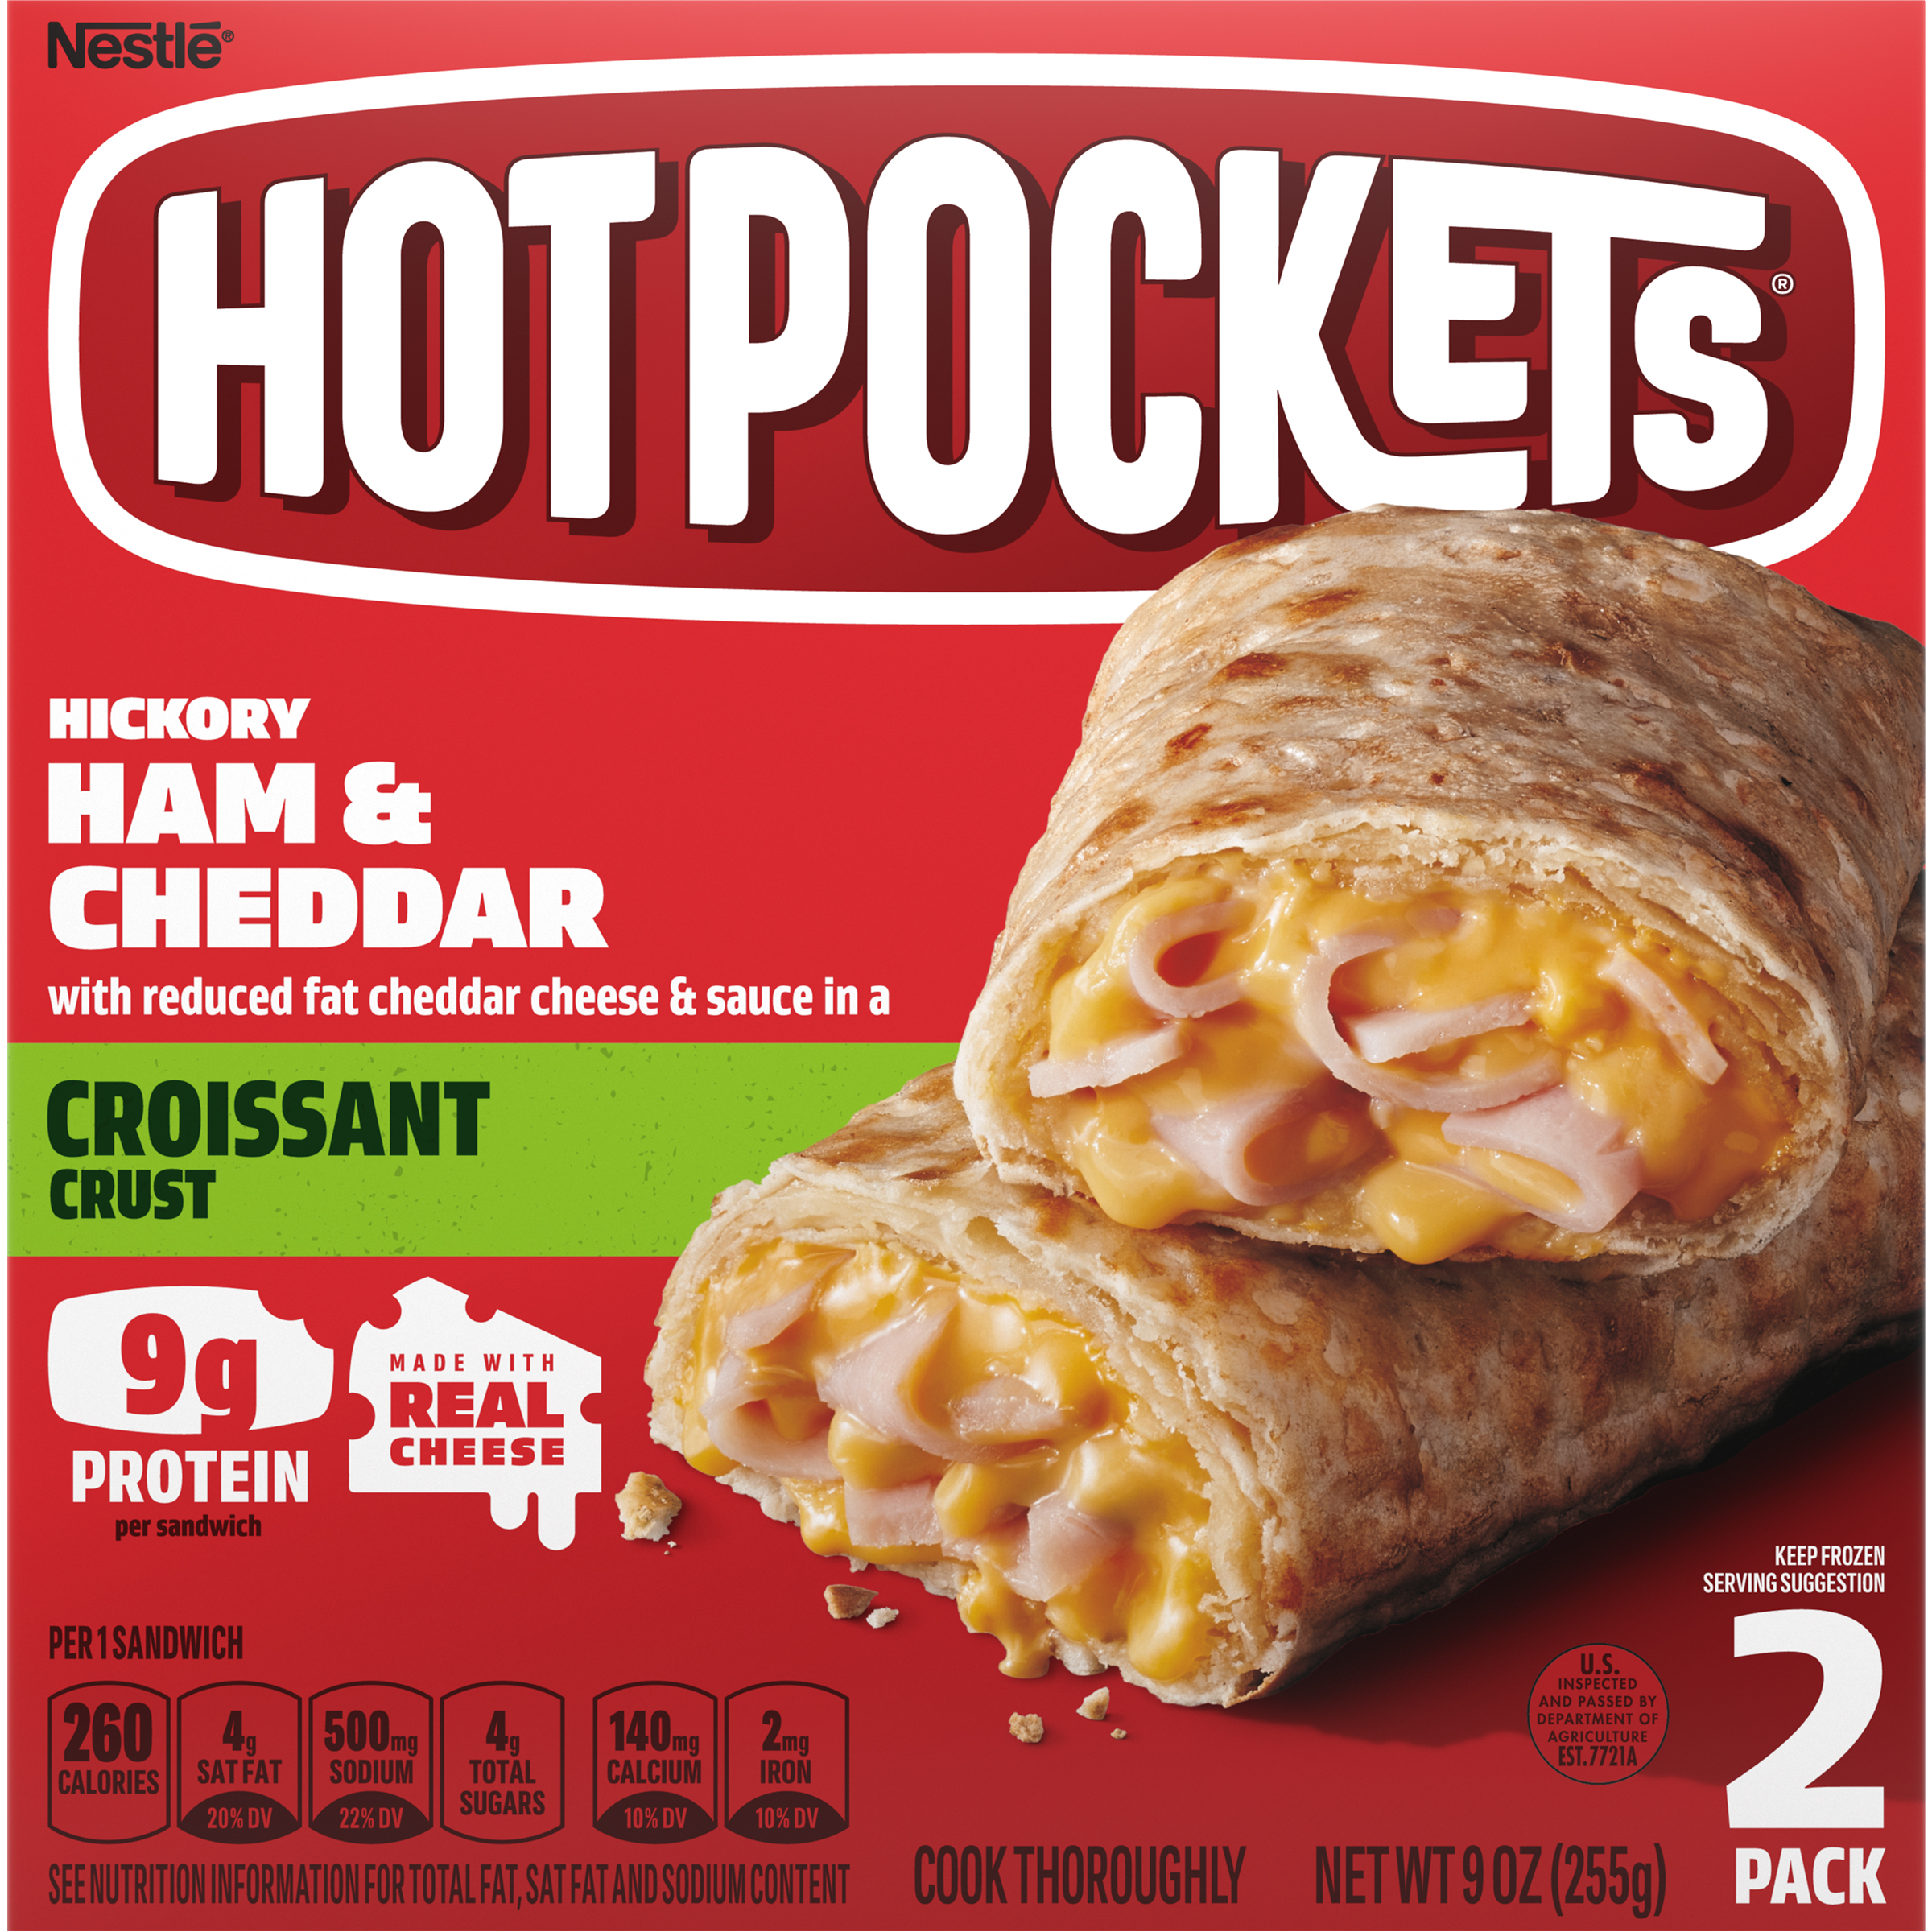 HOT POCKETS Croissant Crust Hickory Ham & Cheddar (2 Pack) 8 units per case 9.0 oz